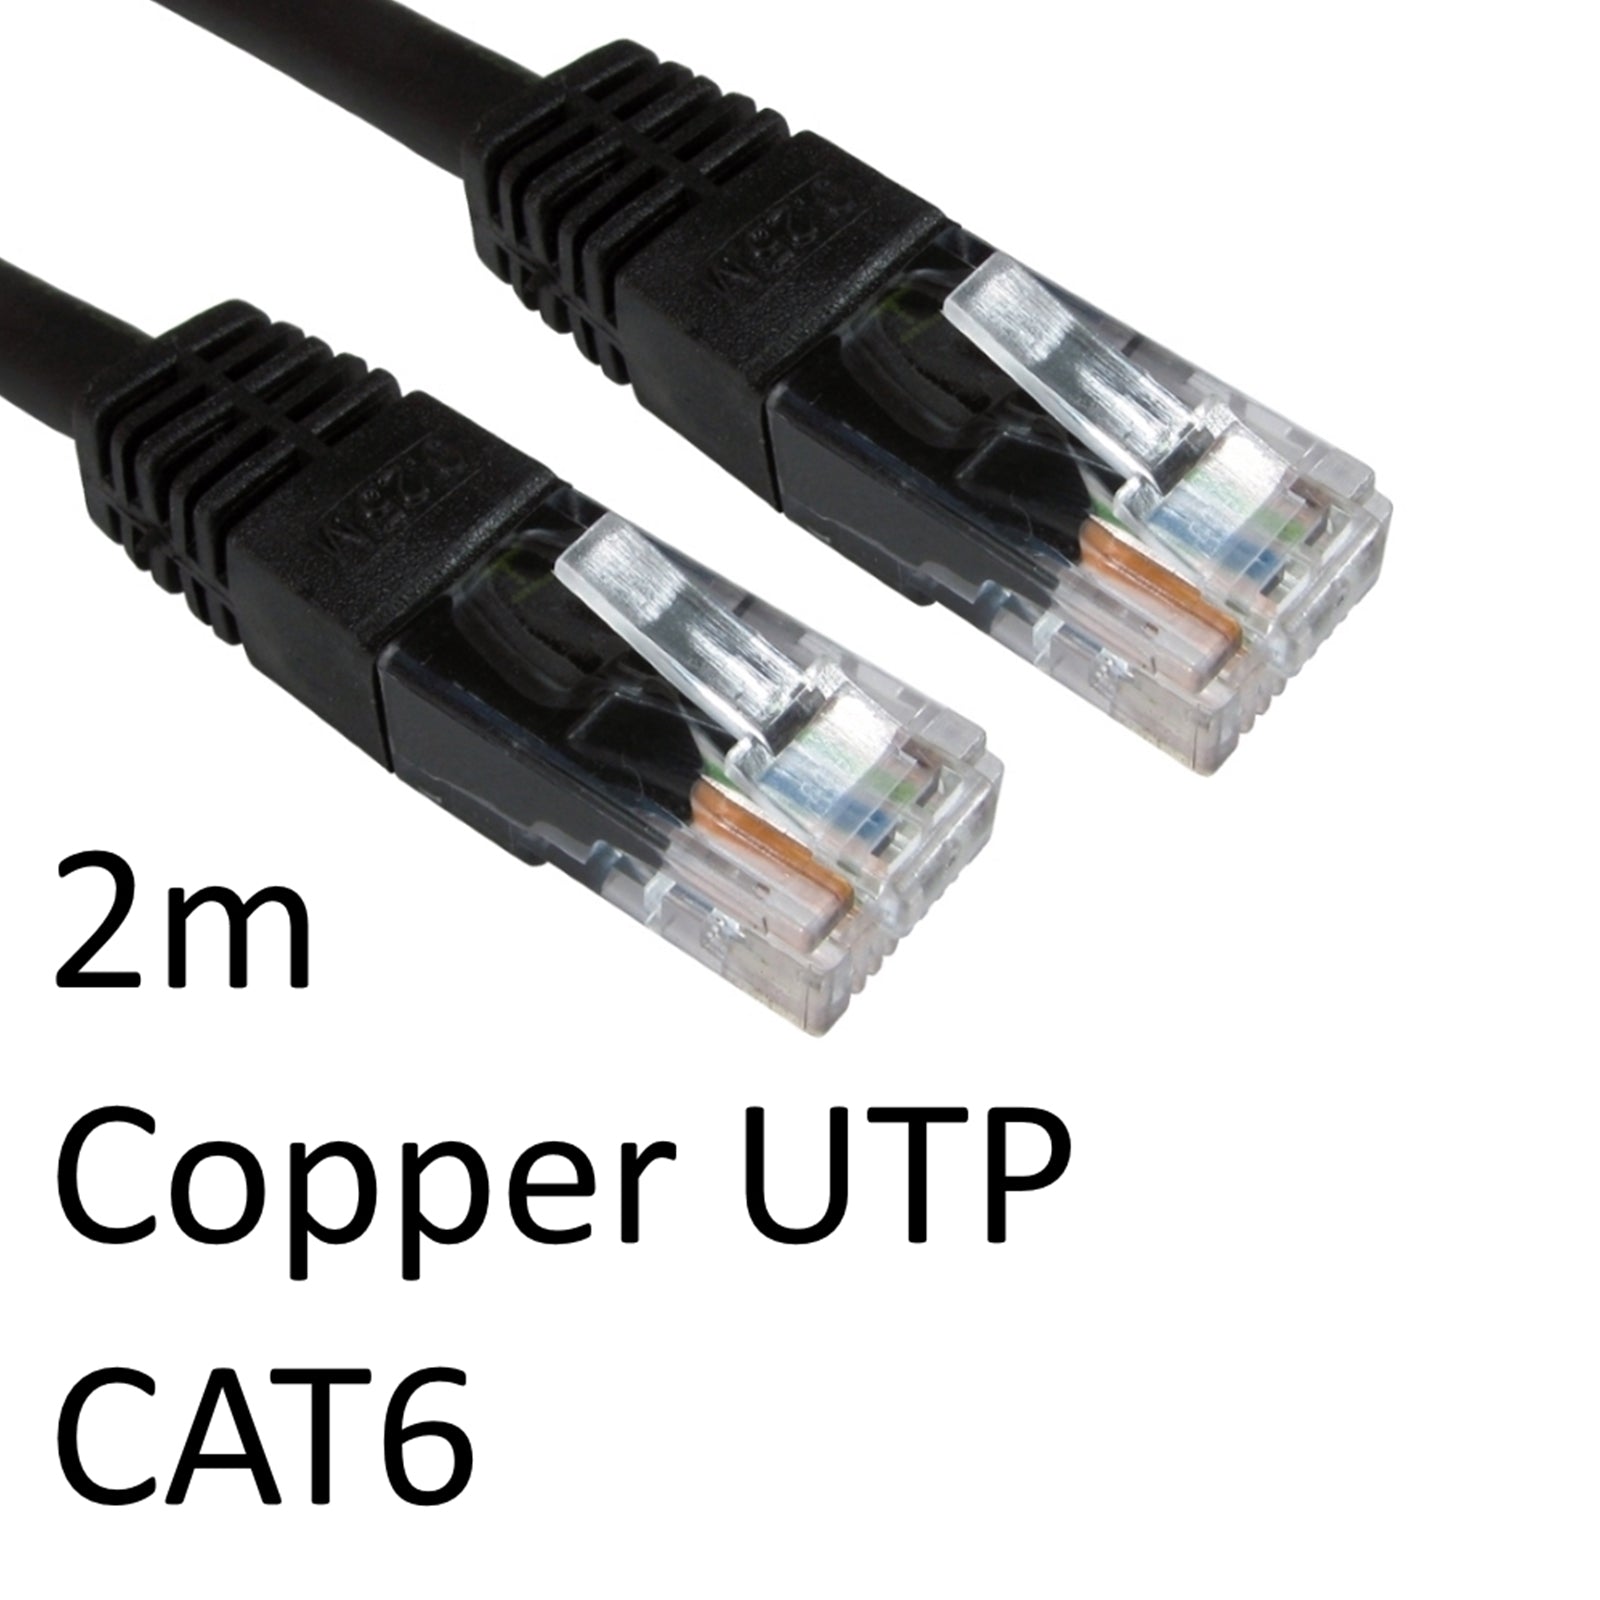 2m CAT6 RJ45 Copper UTP Network Cable - Black